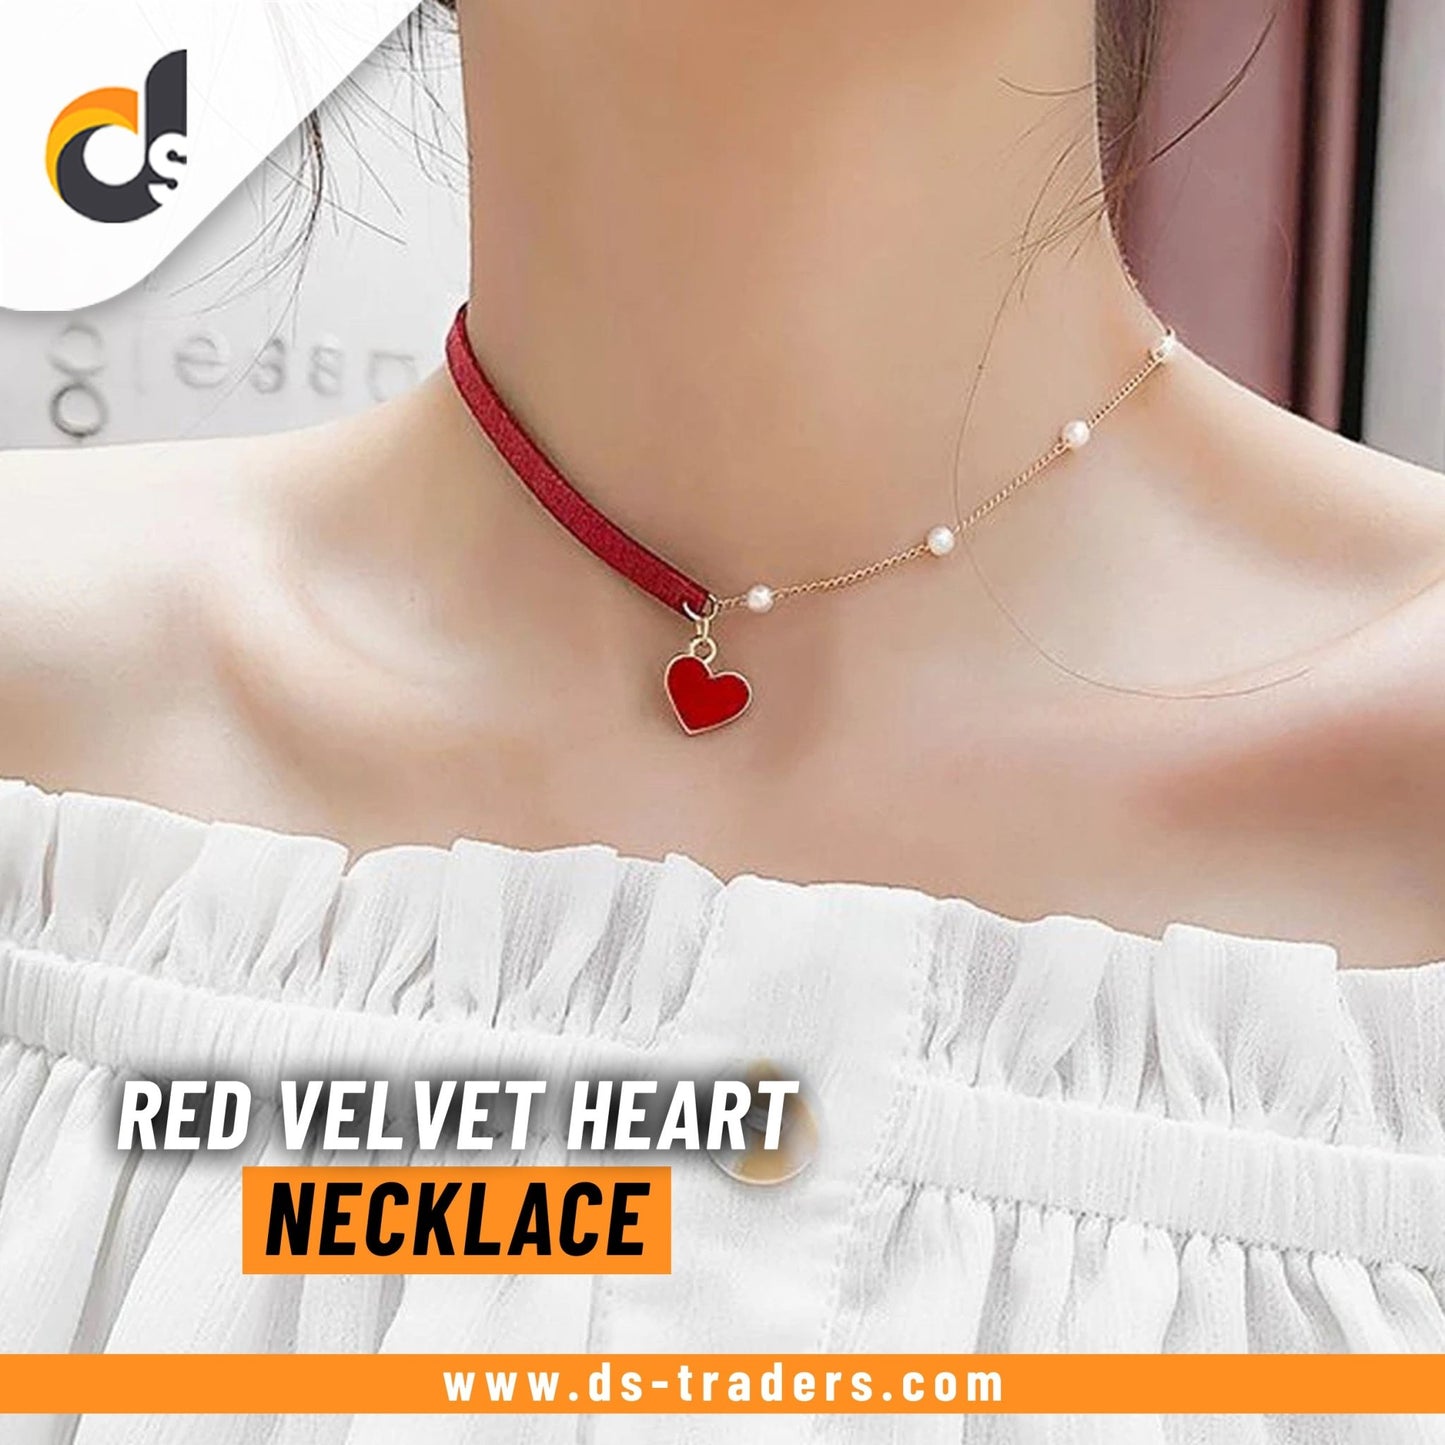 Red Velvet Heart Necklace - DS Traders